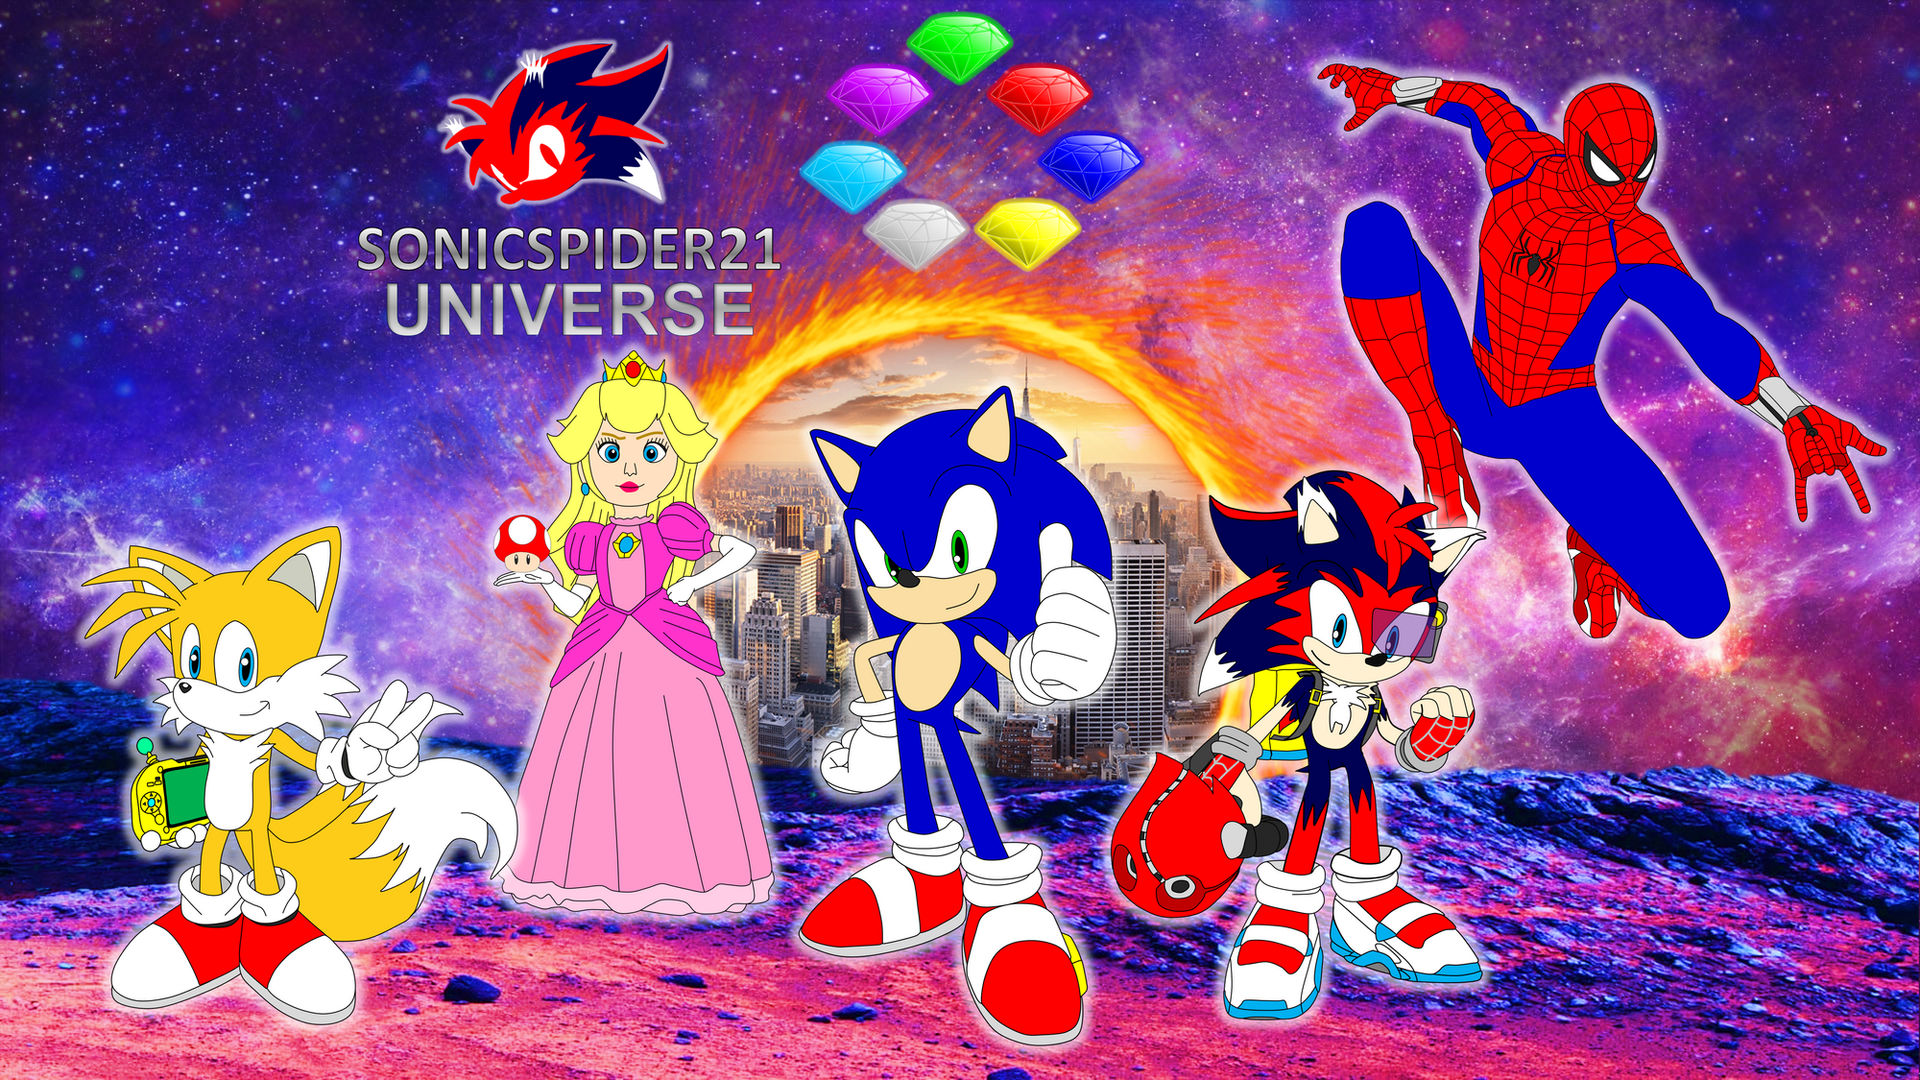 Sonic The Hedgehog 3 custom poster #5 by Nikisawesom on DeviantArt